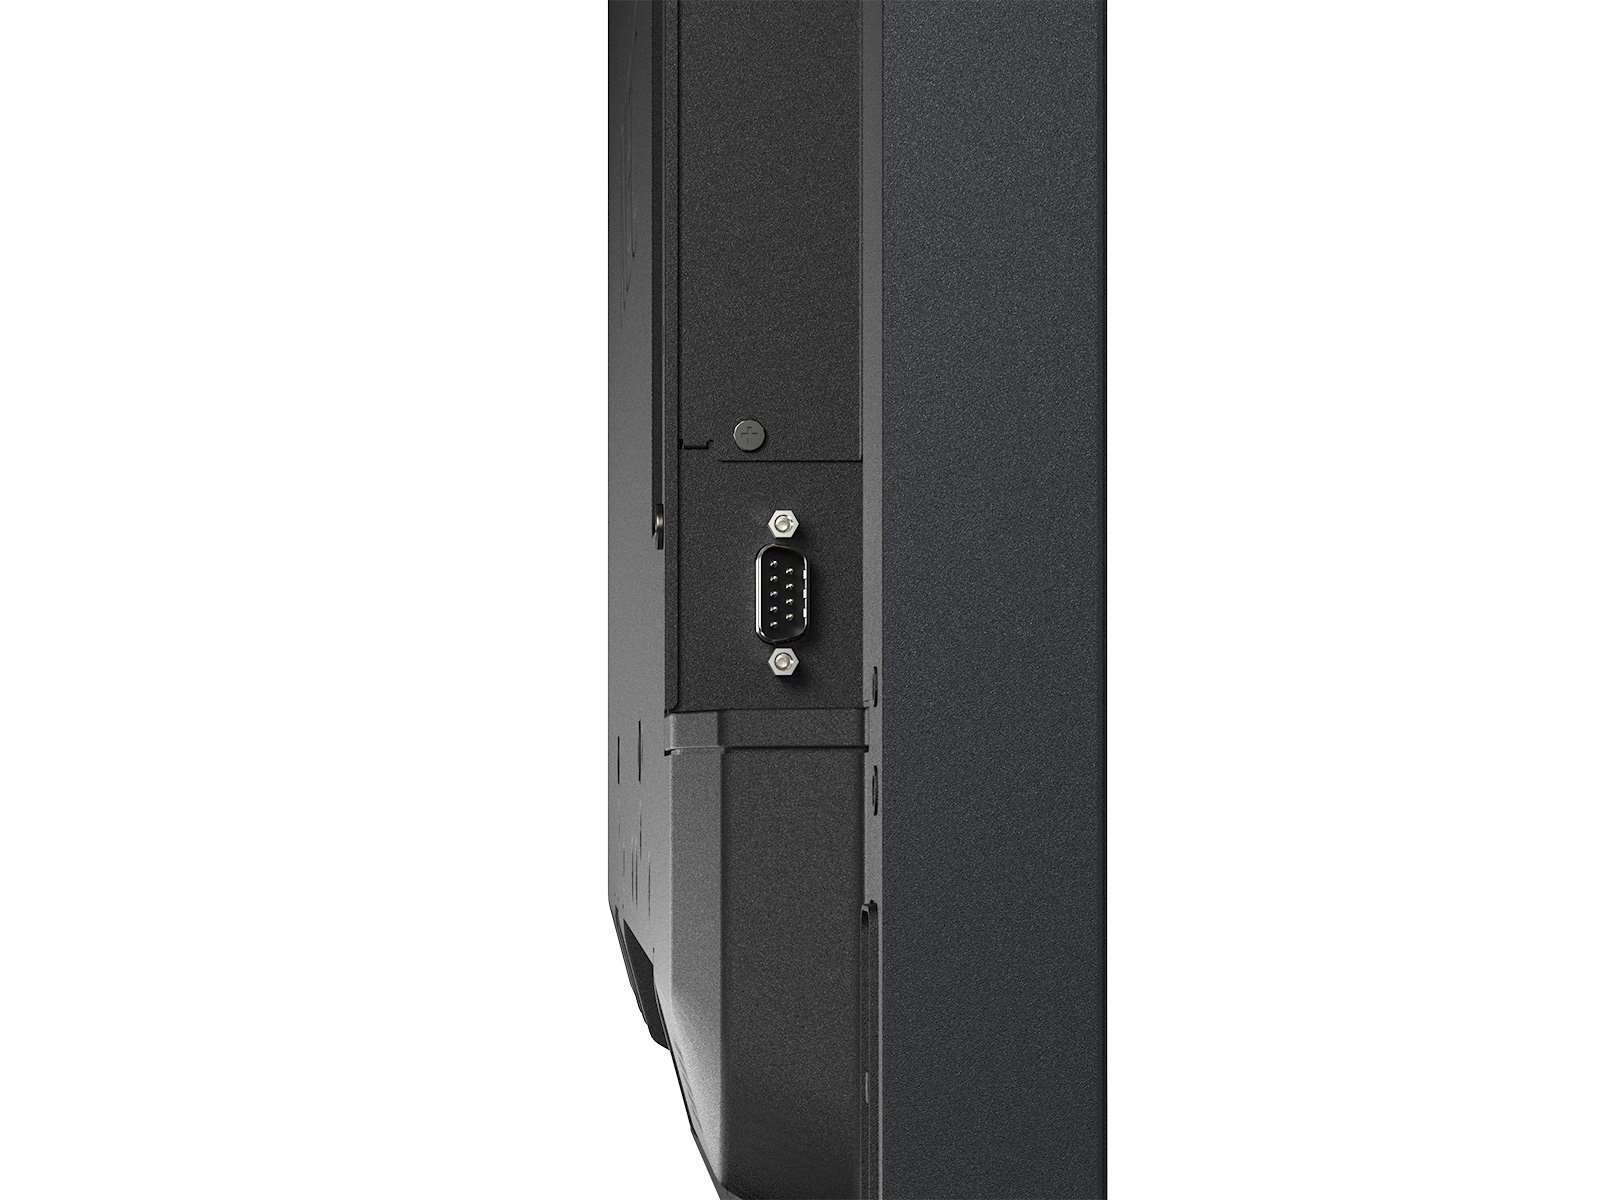 NEC MultiSync M551 - 55 Zoll - 500 cd/m² - Ultra-HD - 3840x2160 Pixel - 24/7 - Message Large Format Display